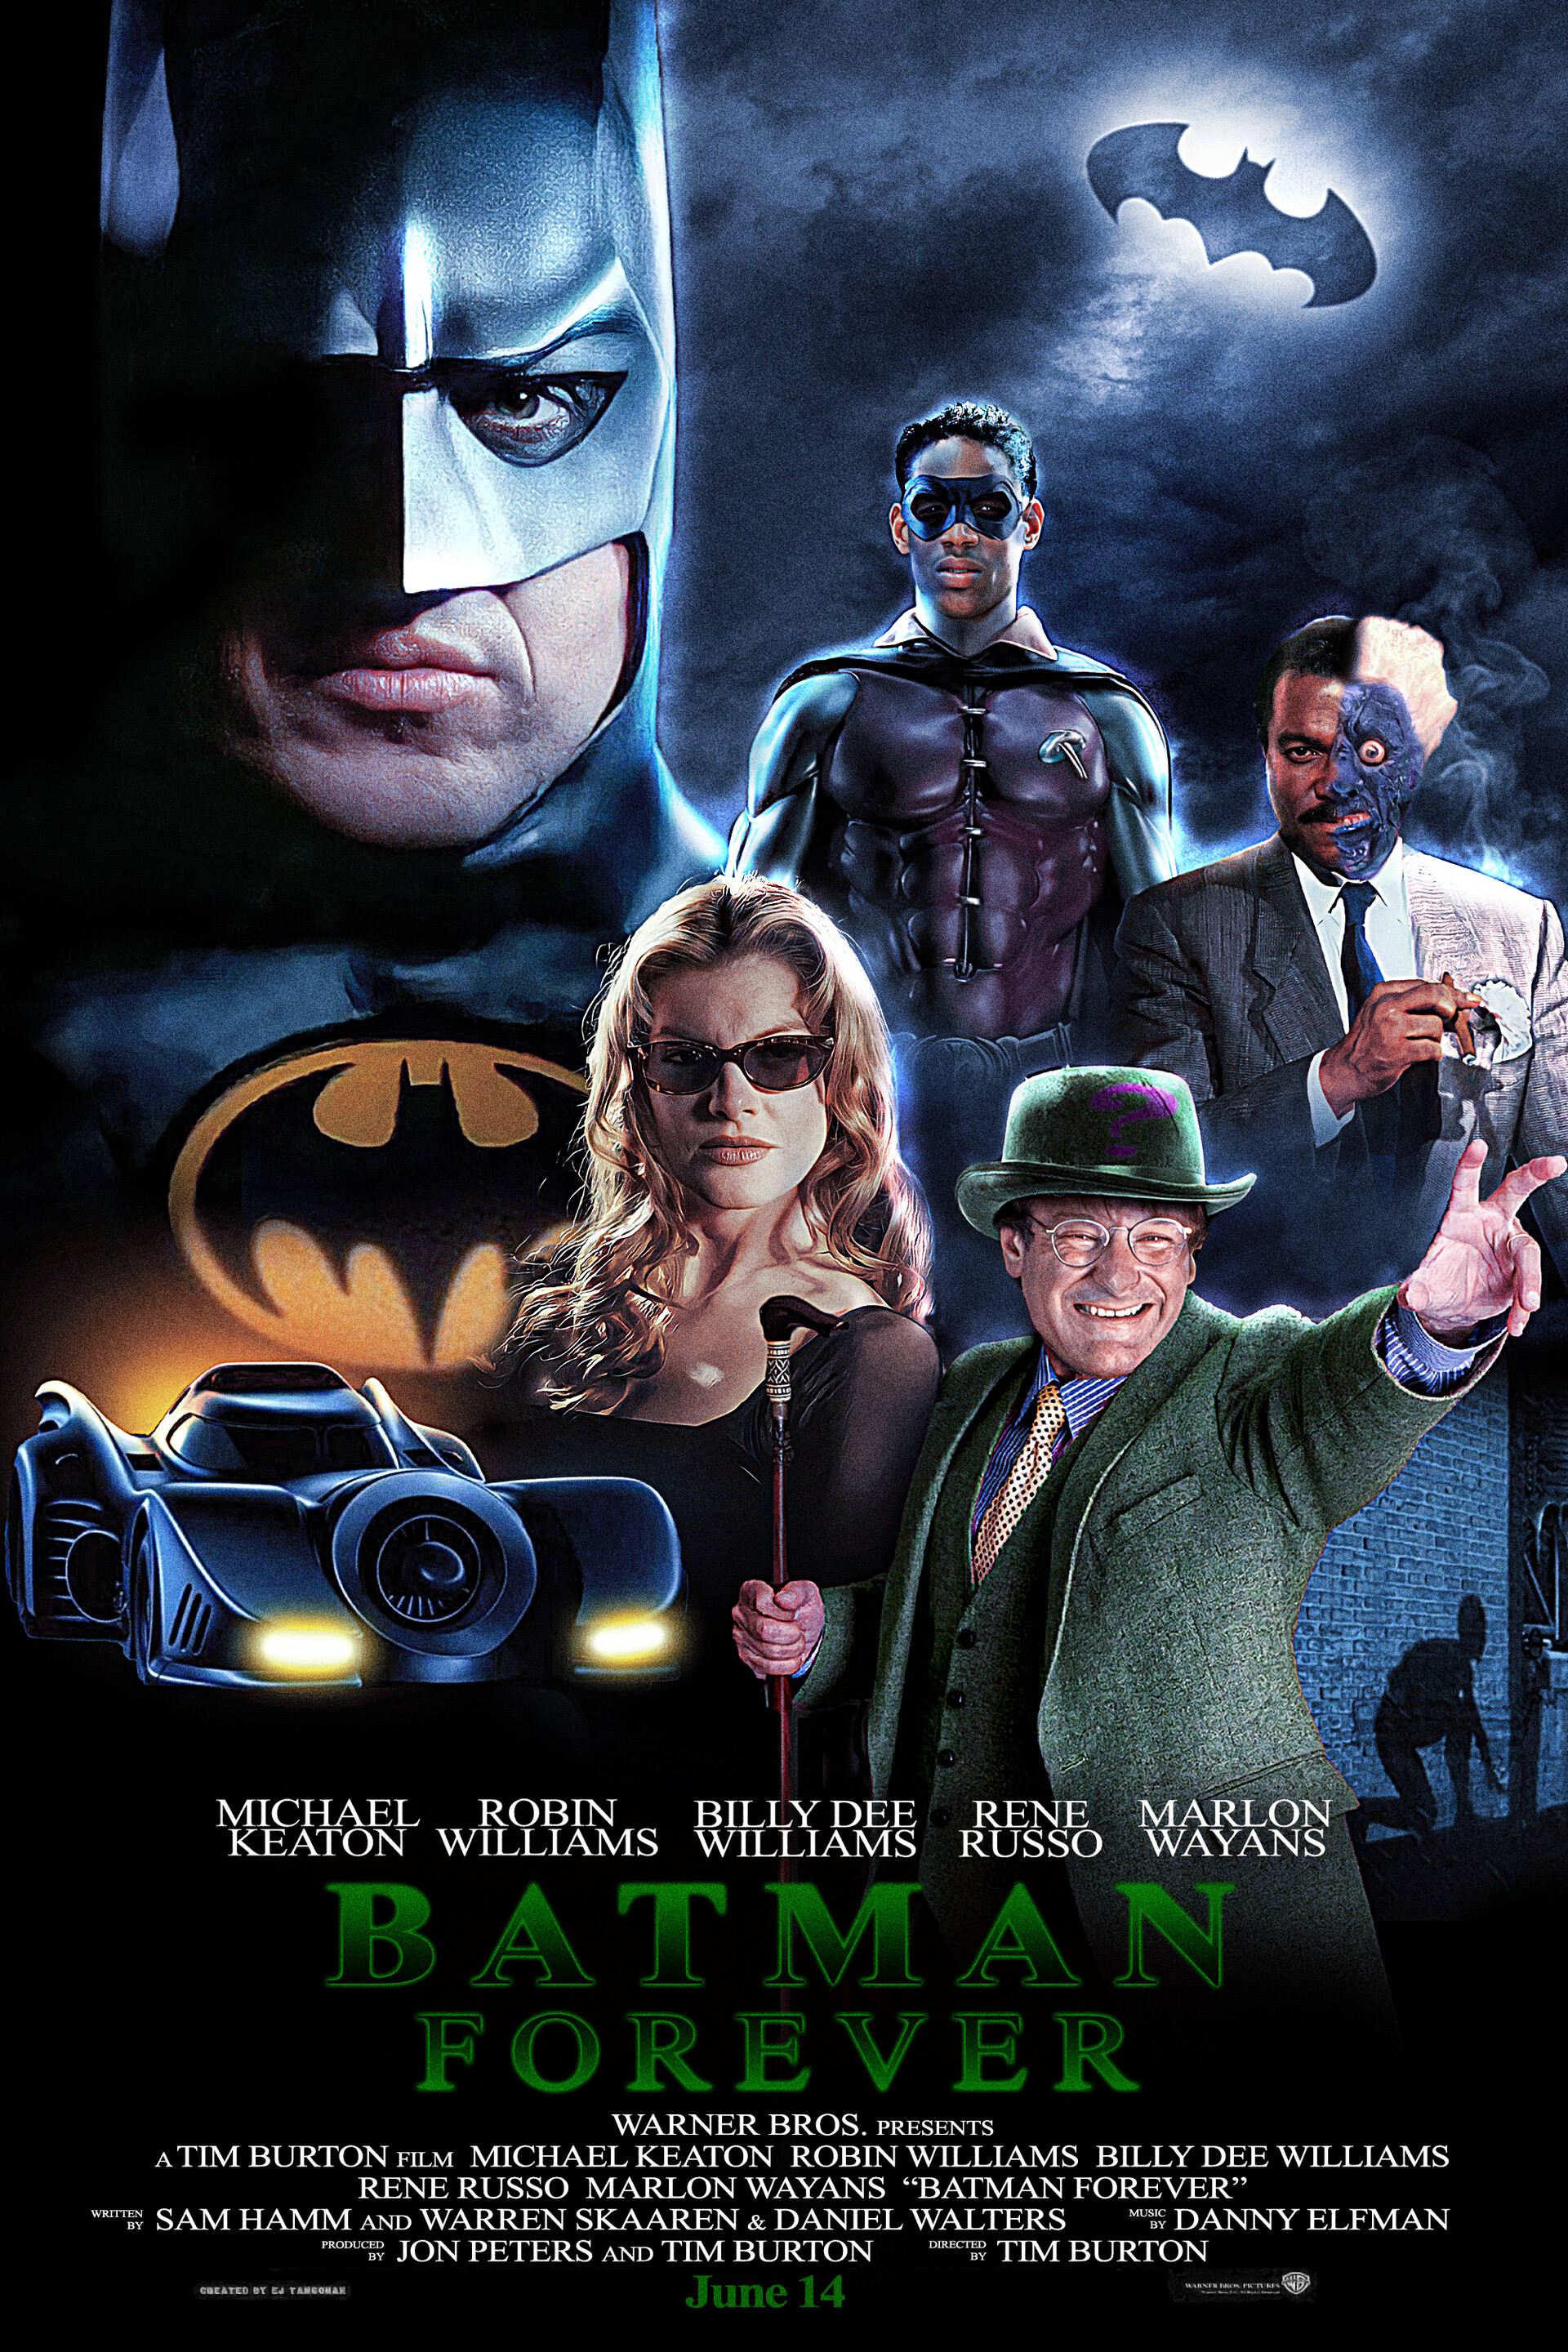 eftertiden Ib lejlighed ArtStation - Tim Burton's Batman Forever Poster